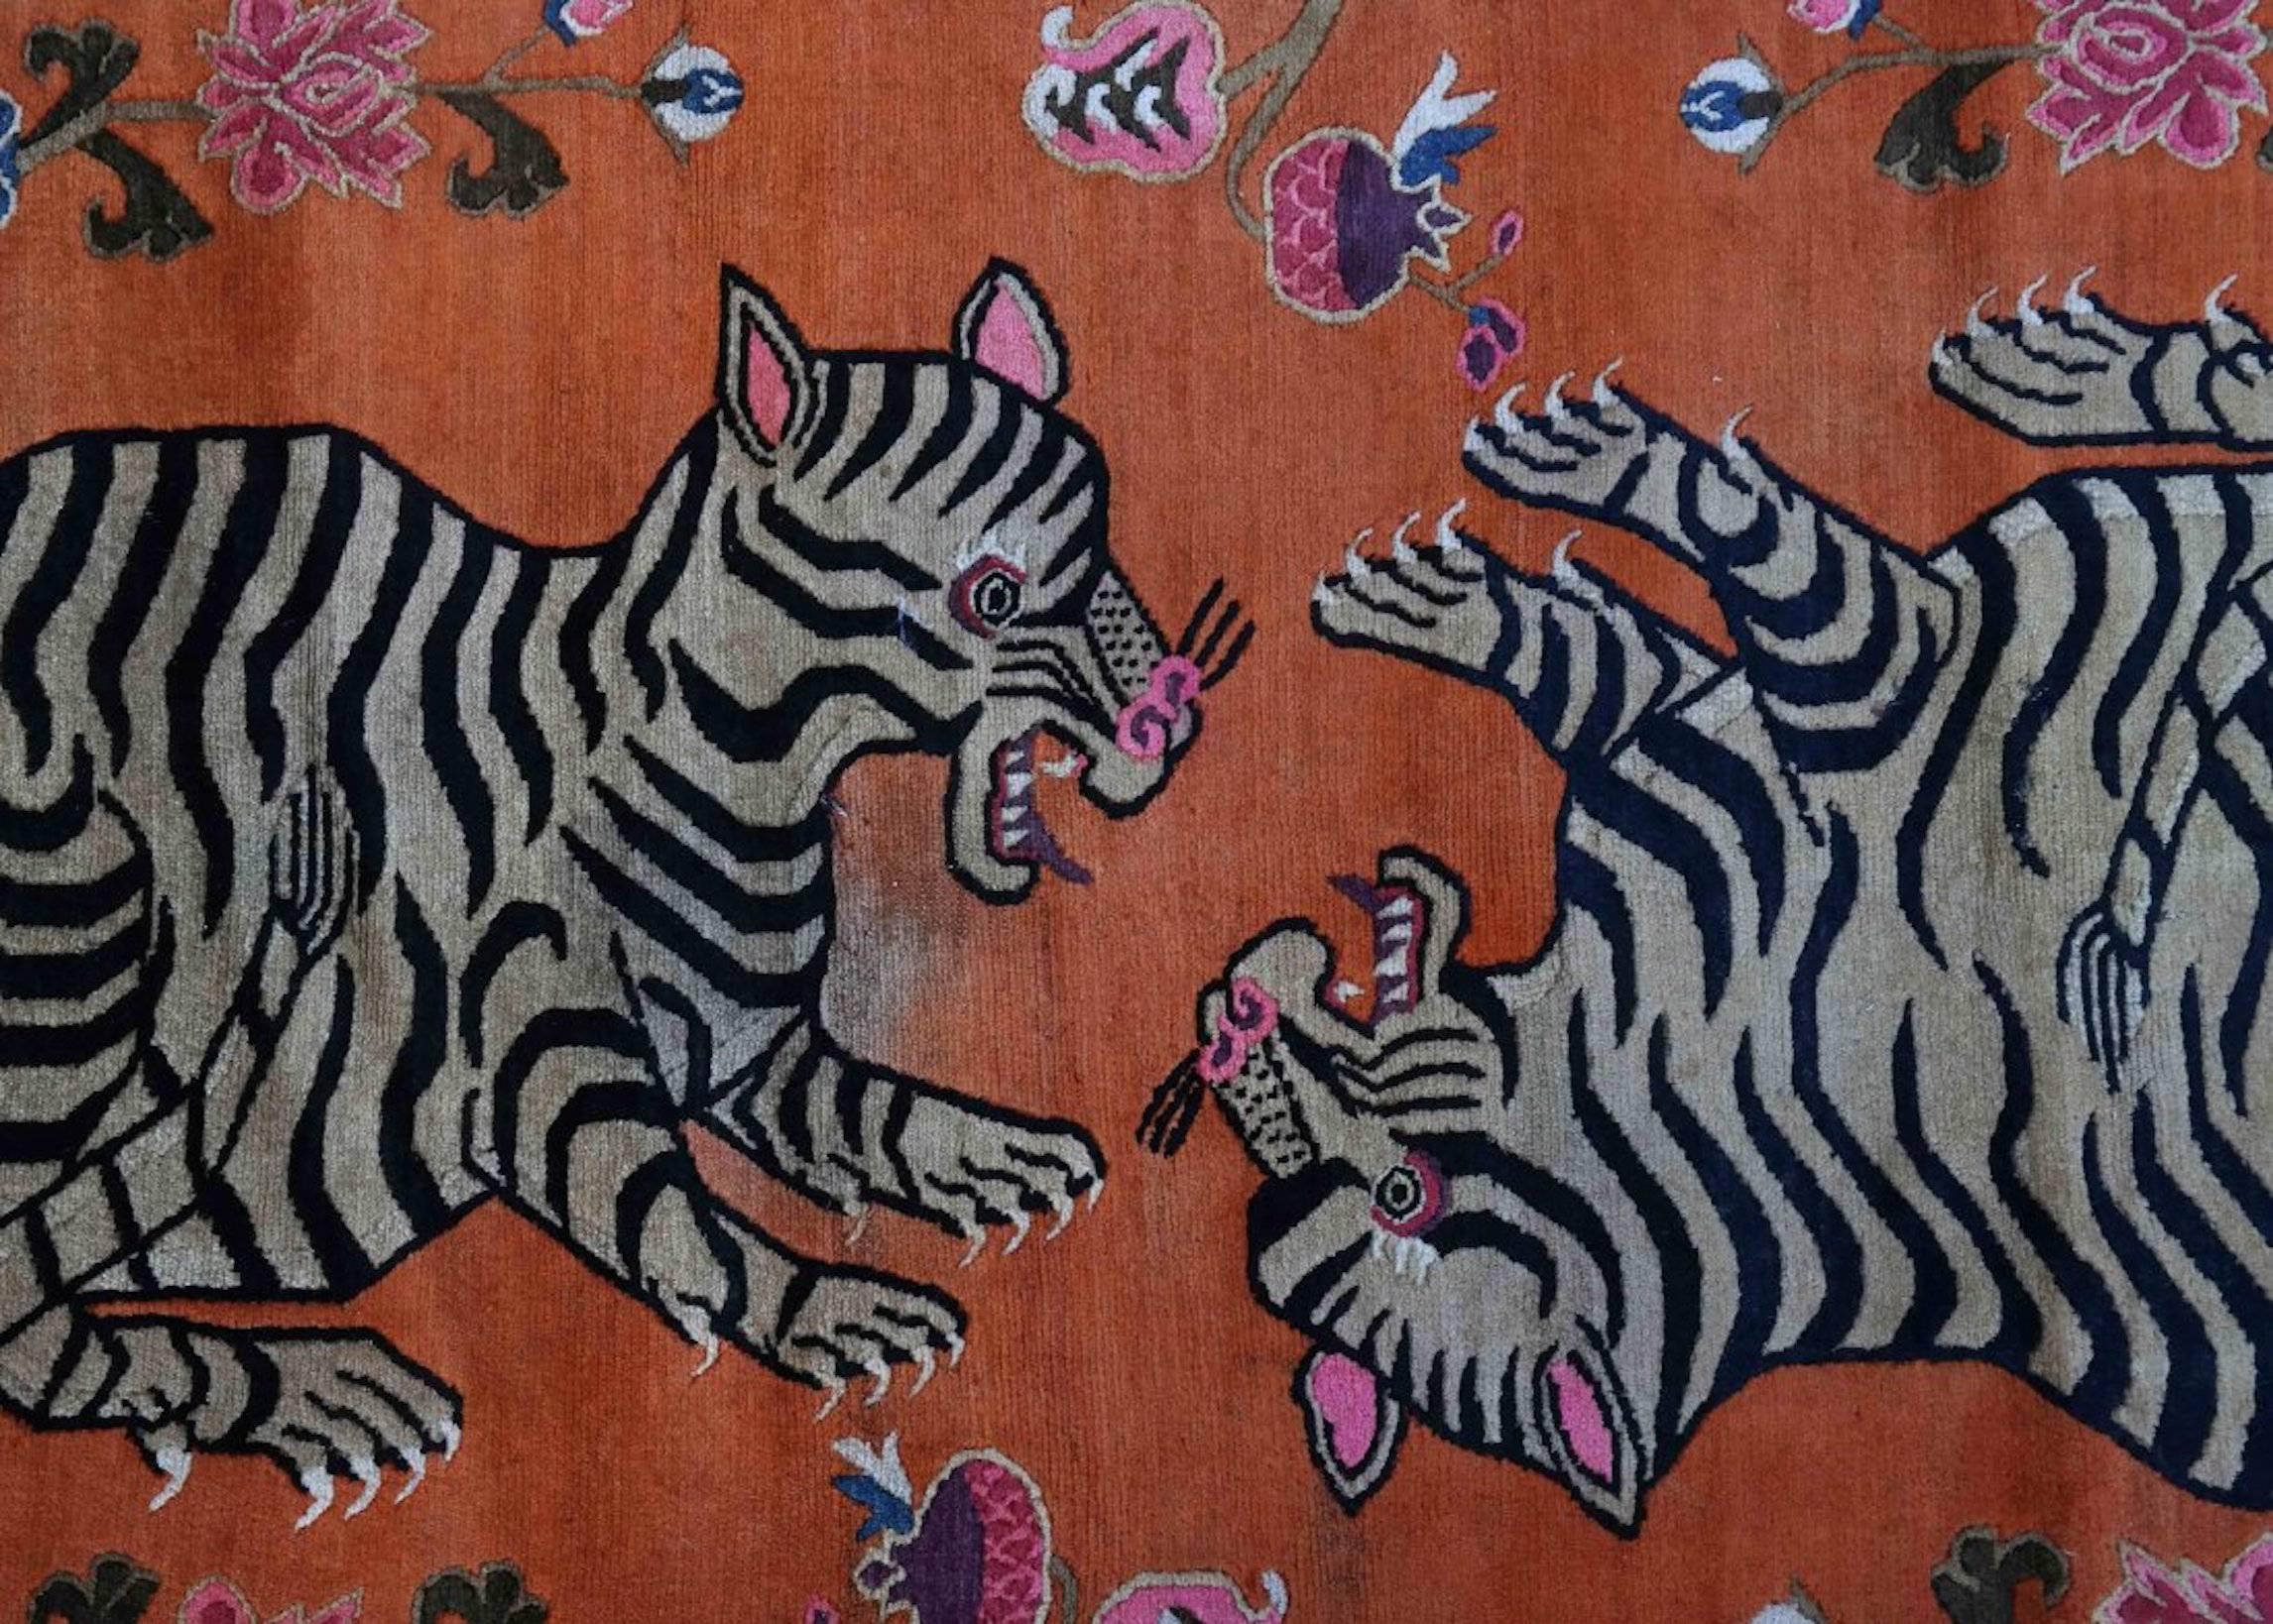 Tibetan rug depicting playful tiger cubs. 

Dimensions: 68